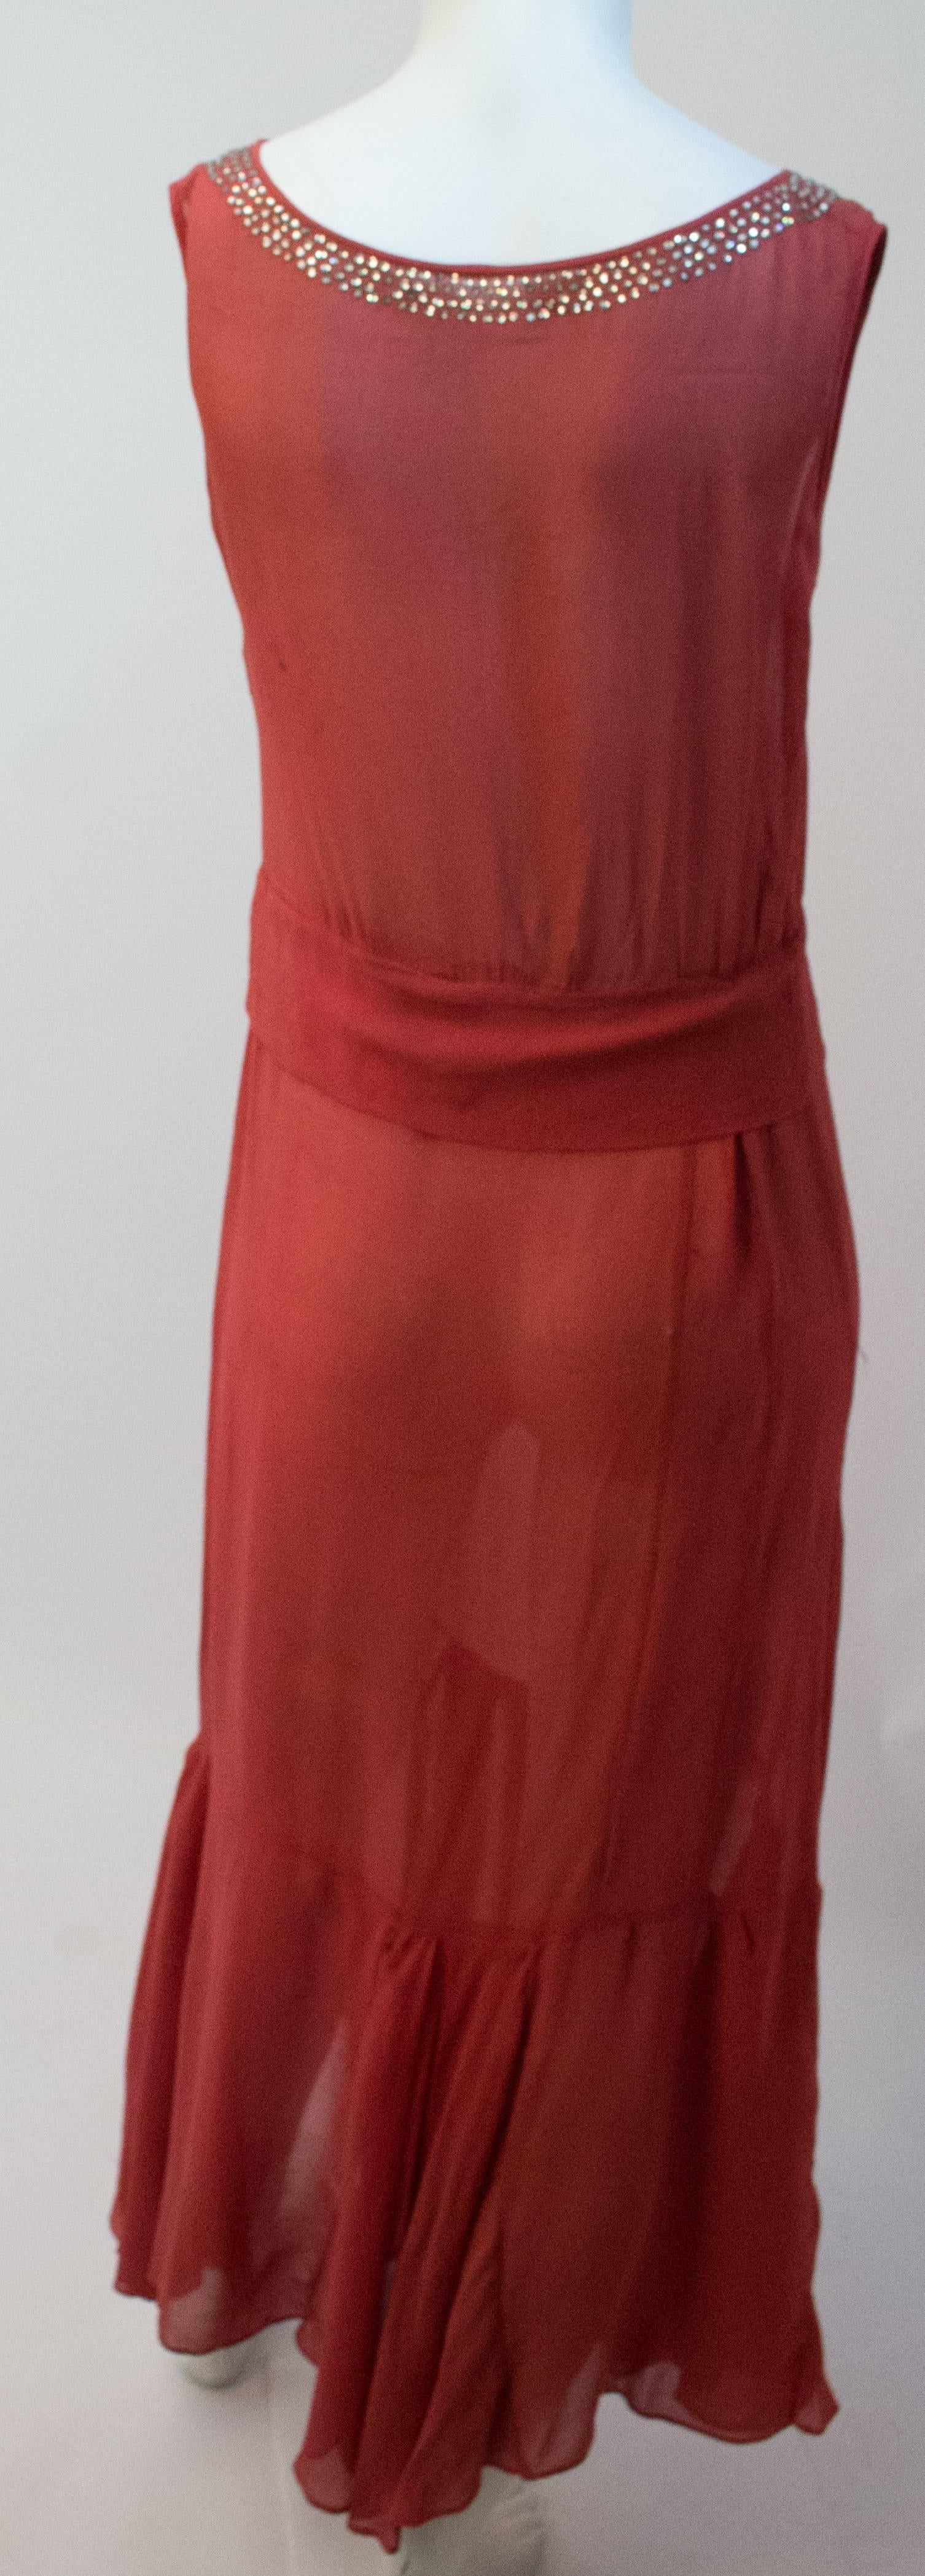 20s Trompe L'Oeil Rhinestone Bow Dress. No closures. Some wear shown in photos. 